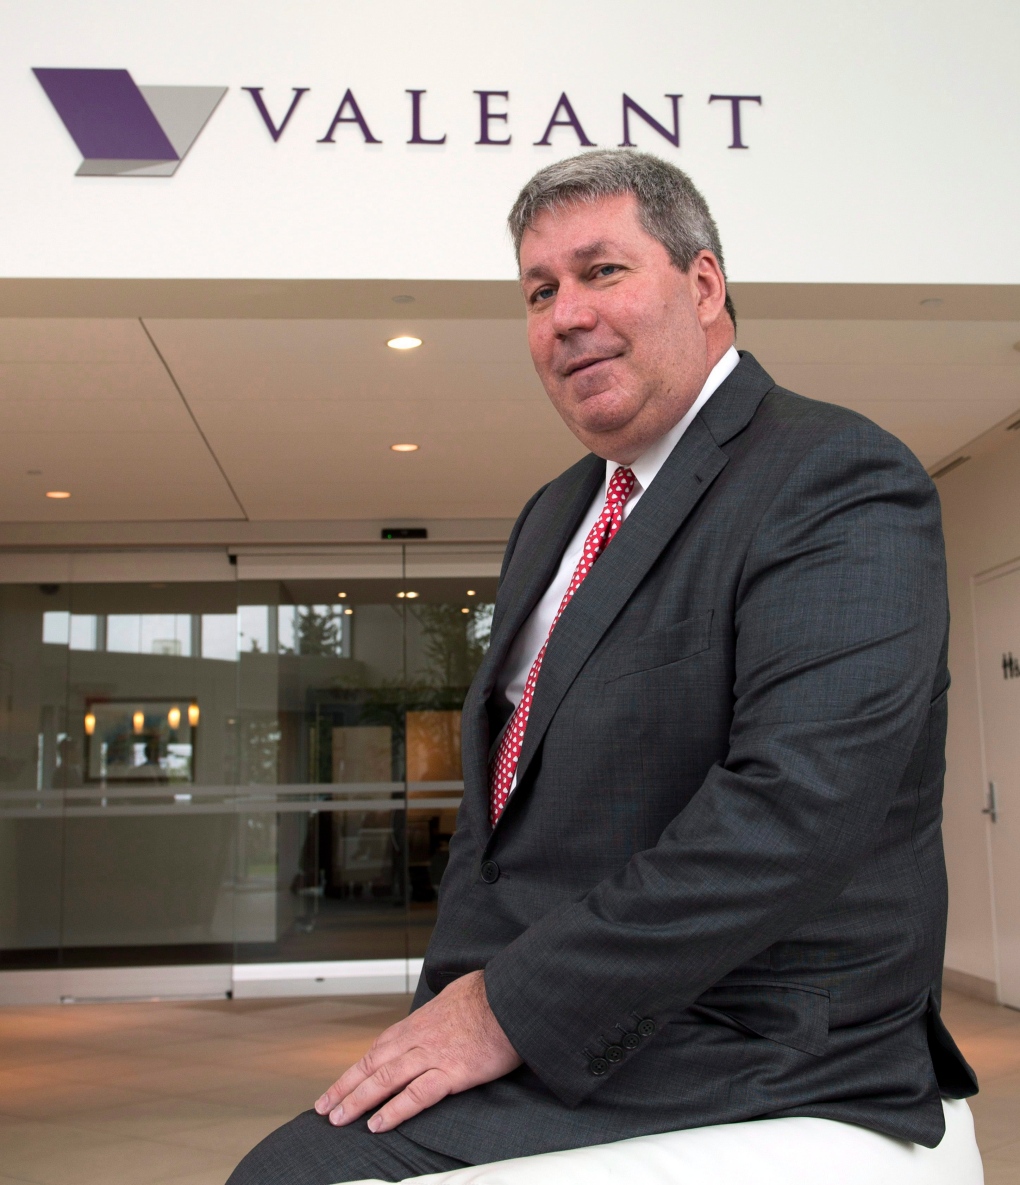 Valeant Pharmaceuticals CEO Pearson